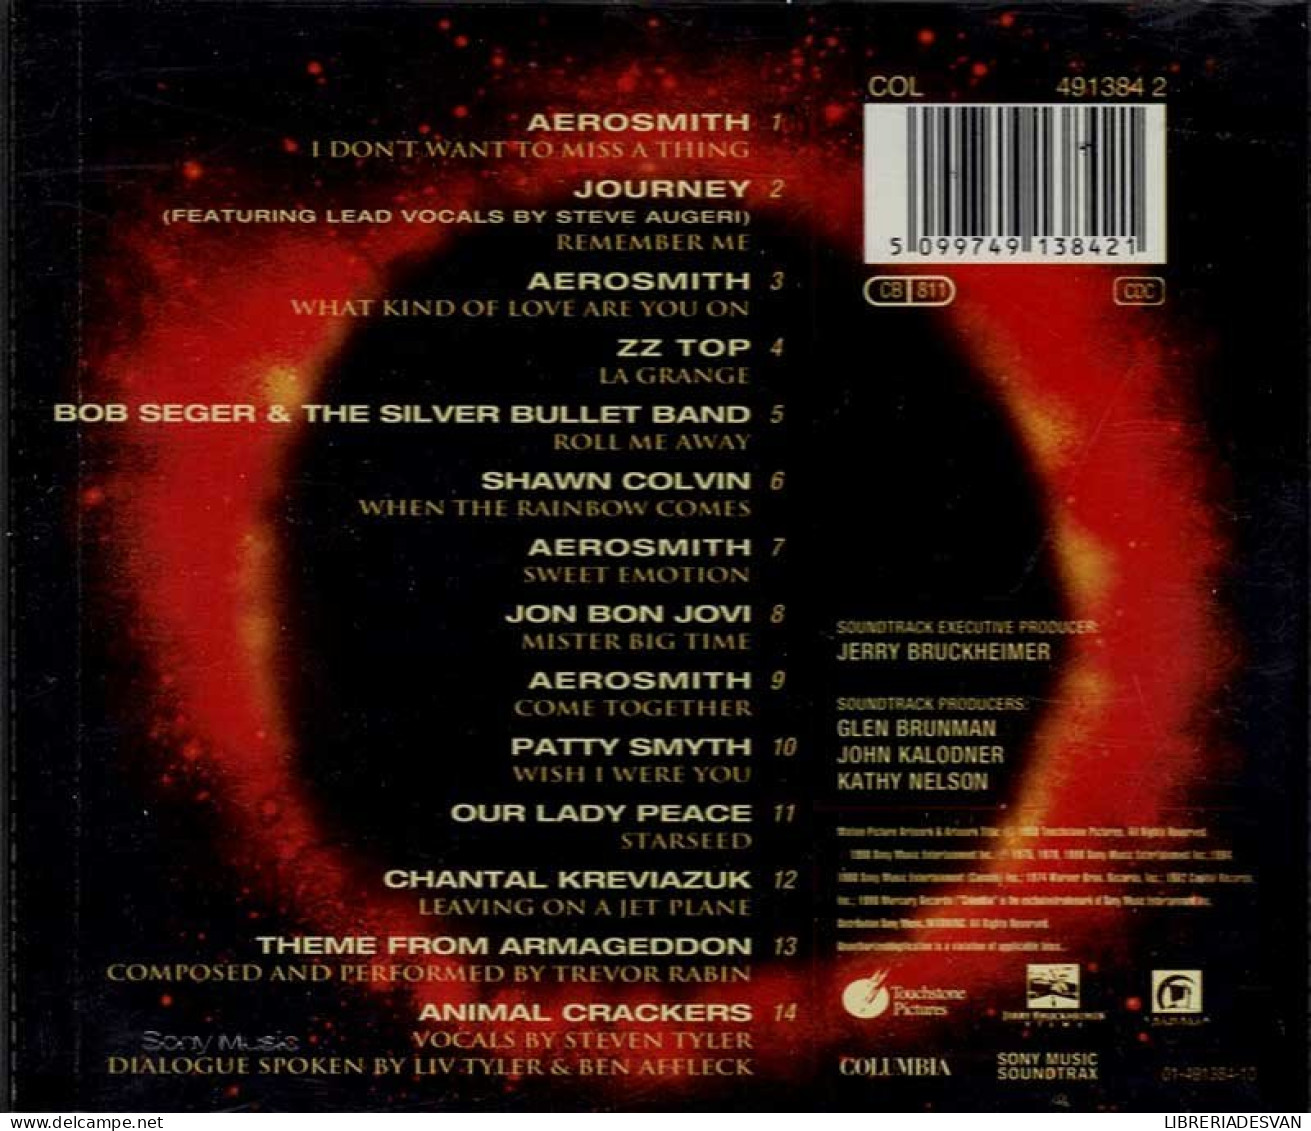 Armageddon - The Album (BSO). CD - Soundtracks, Film Music